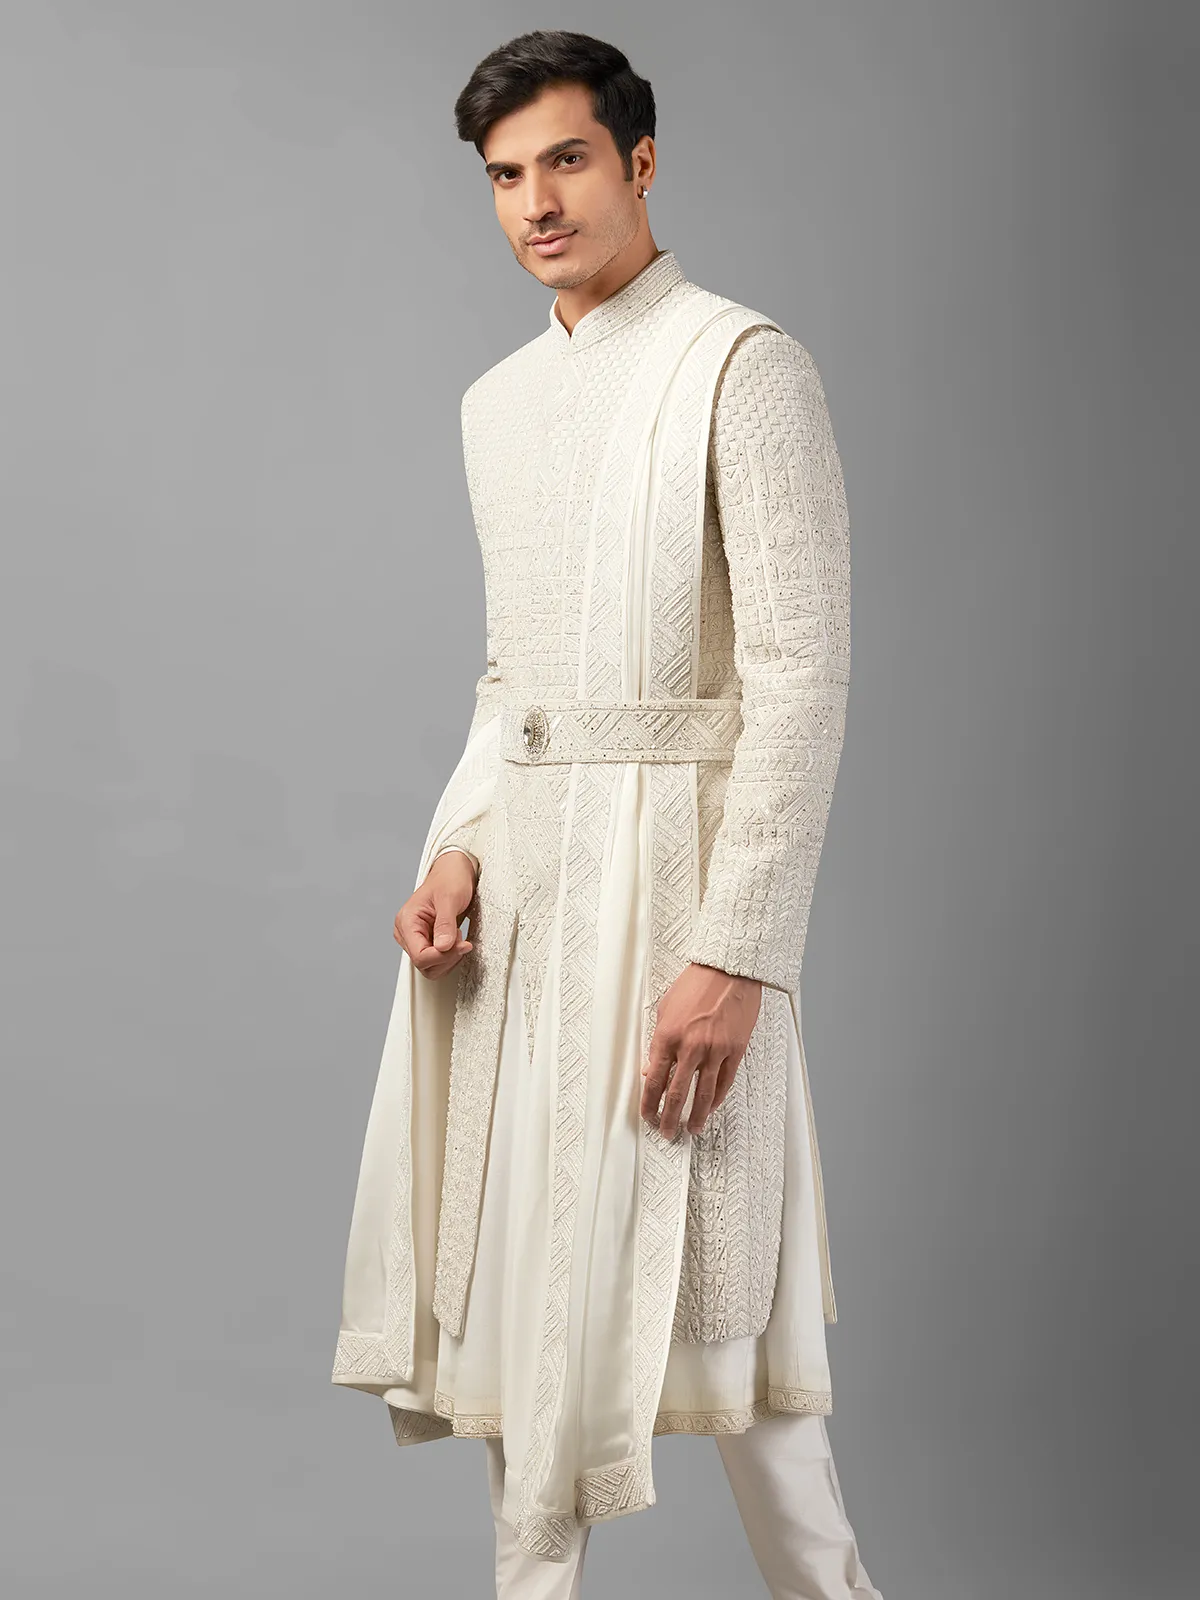 Off-white peshwai style groom sherwani